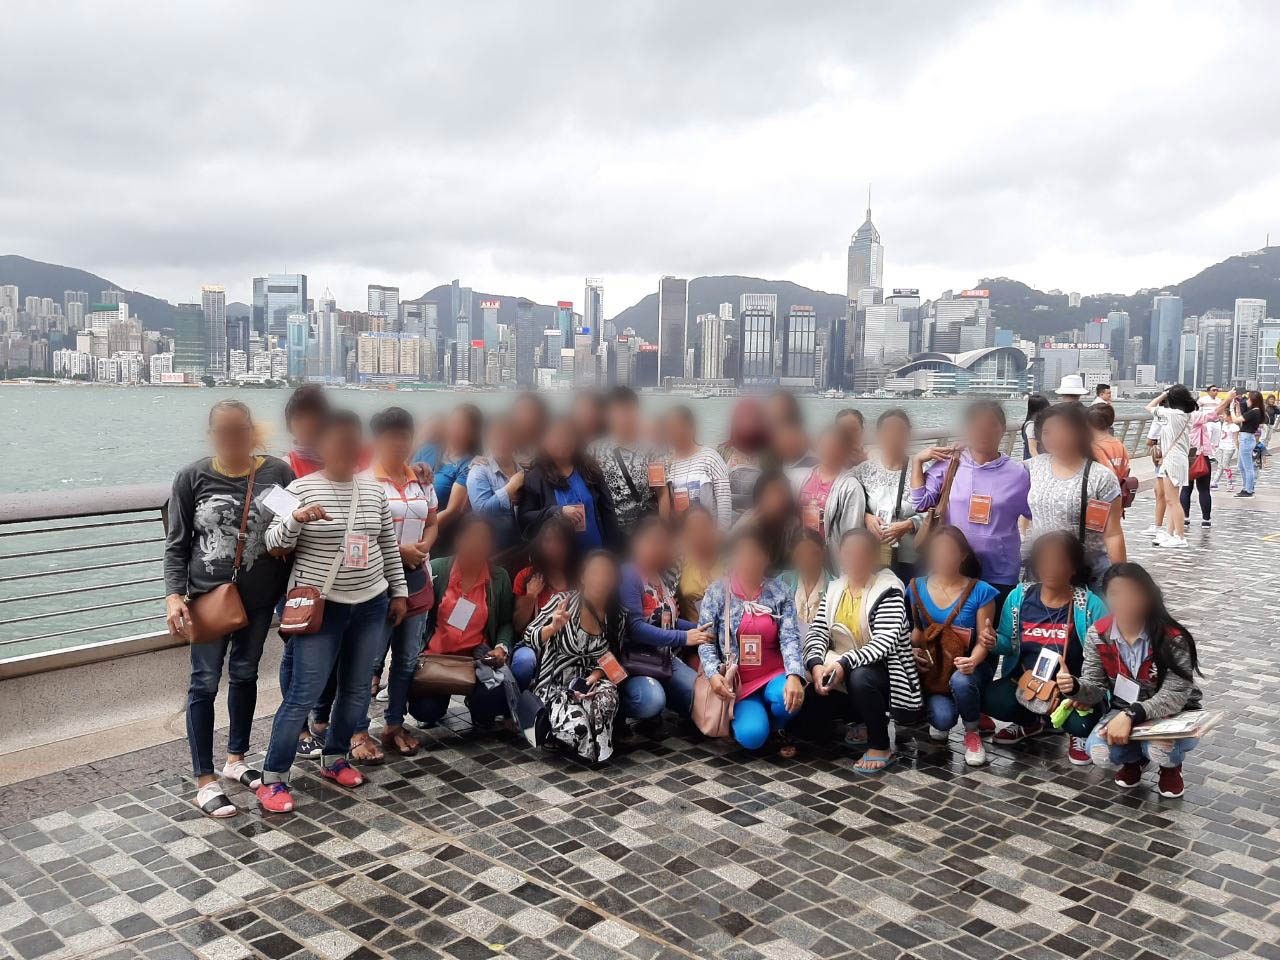 LOOK: Government brings former NPA rebels to Hong Kong for sightseeing, shopping